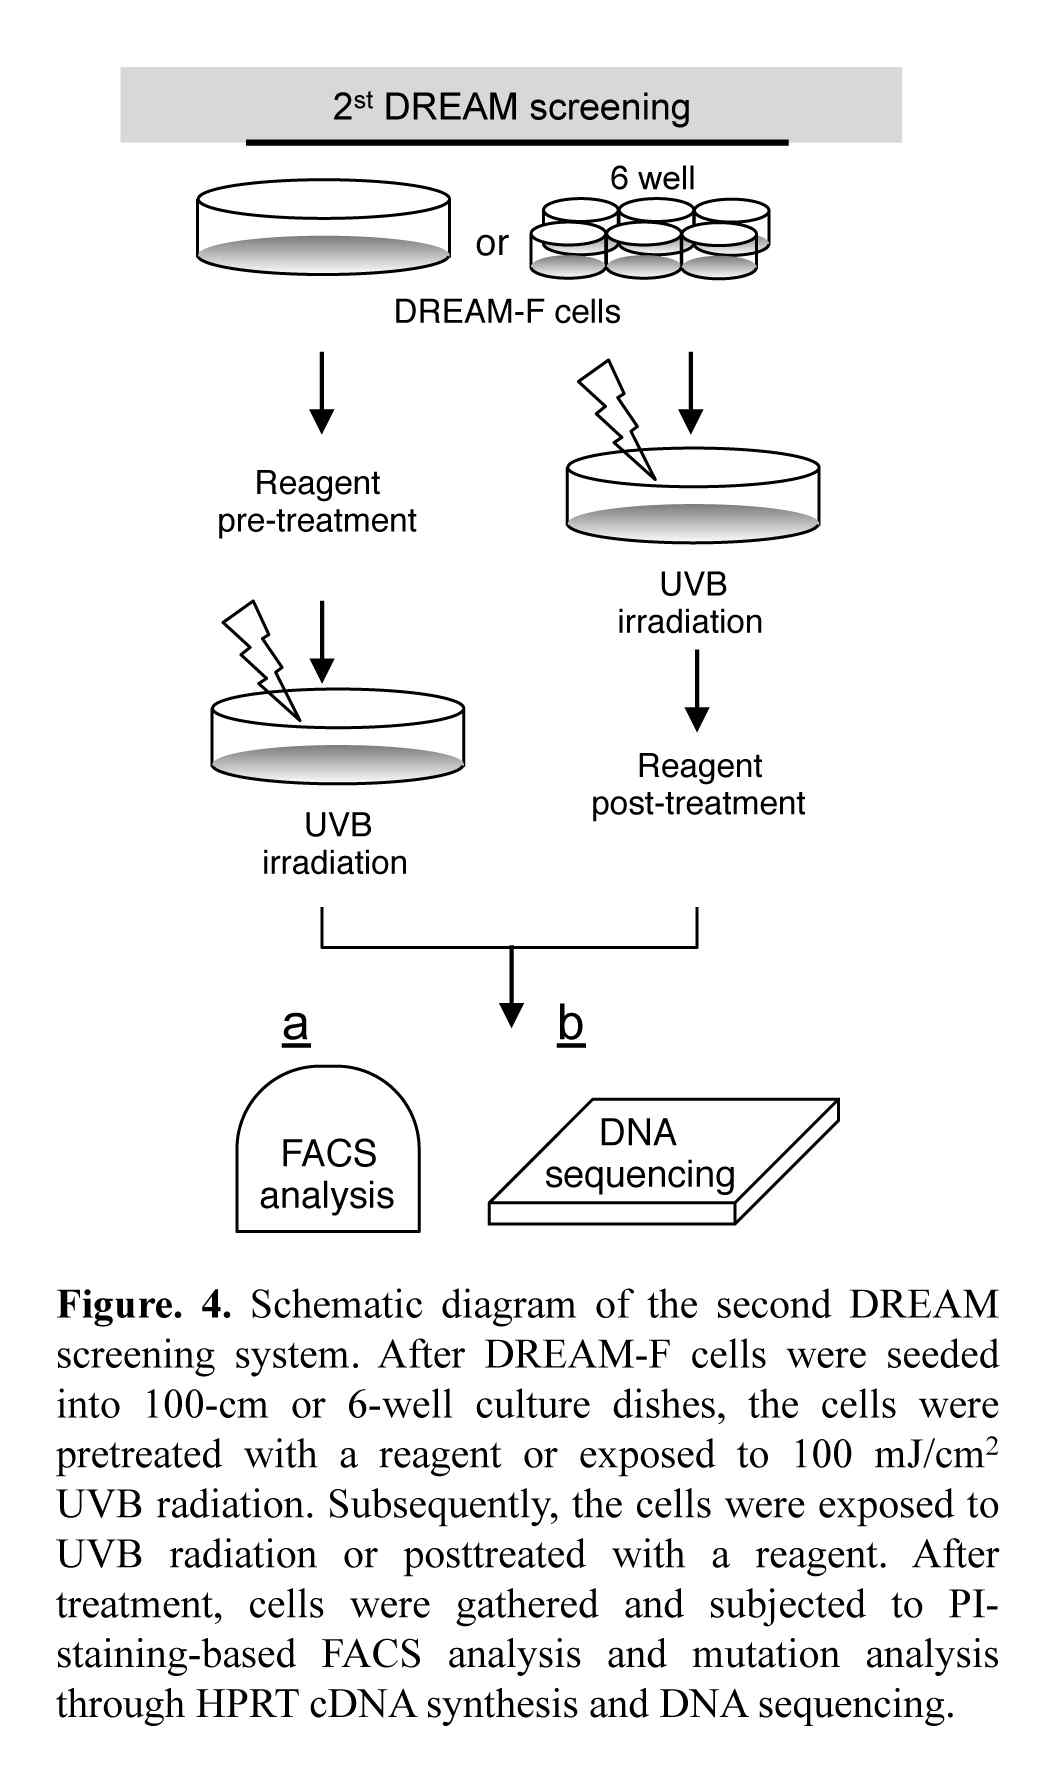 2nd DREAM screening system의 도식화